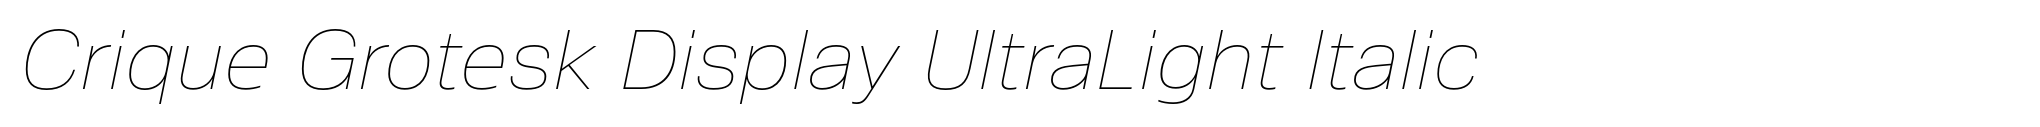 Crique Grotesk Display UltraLight Italic image